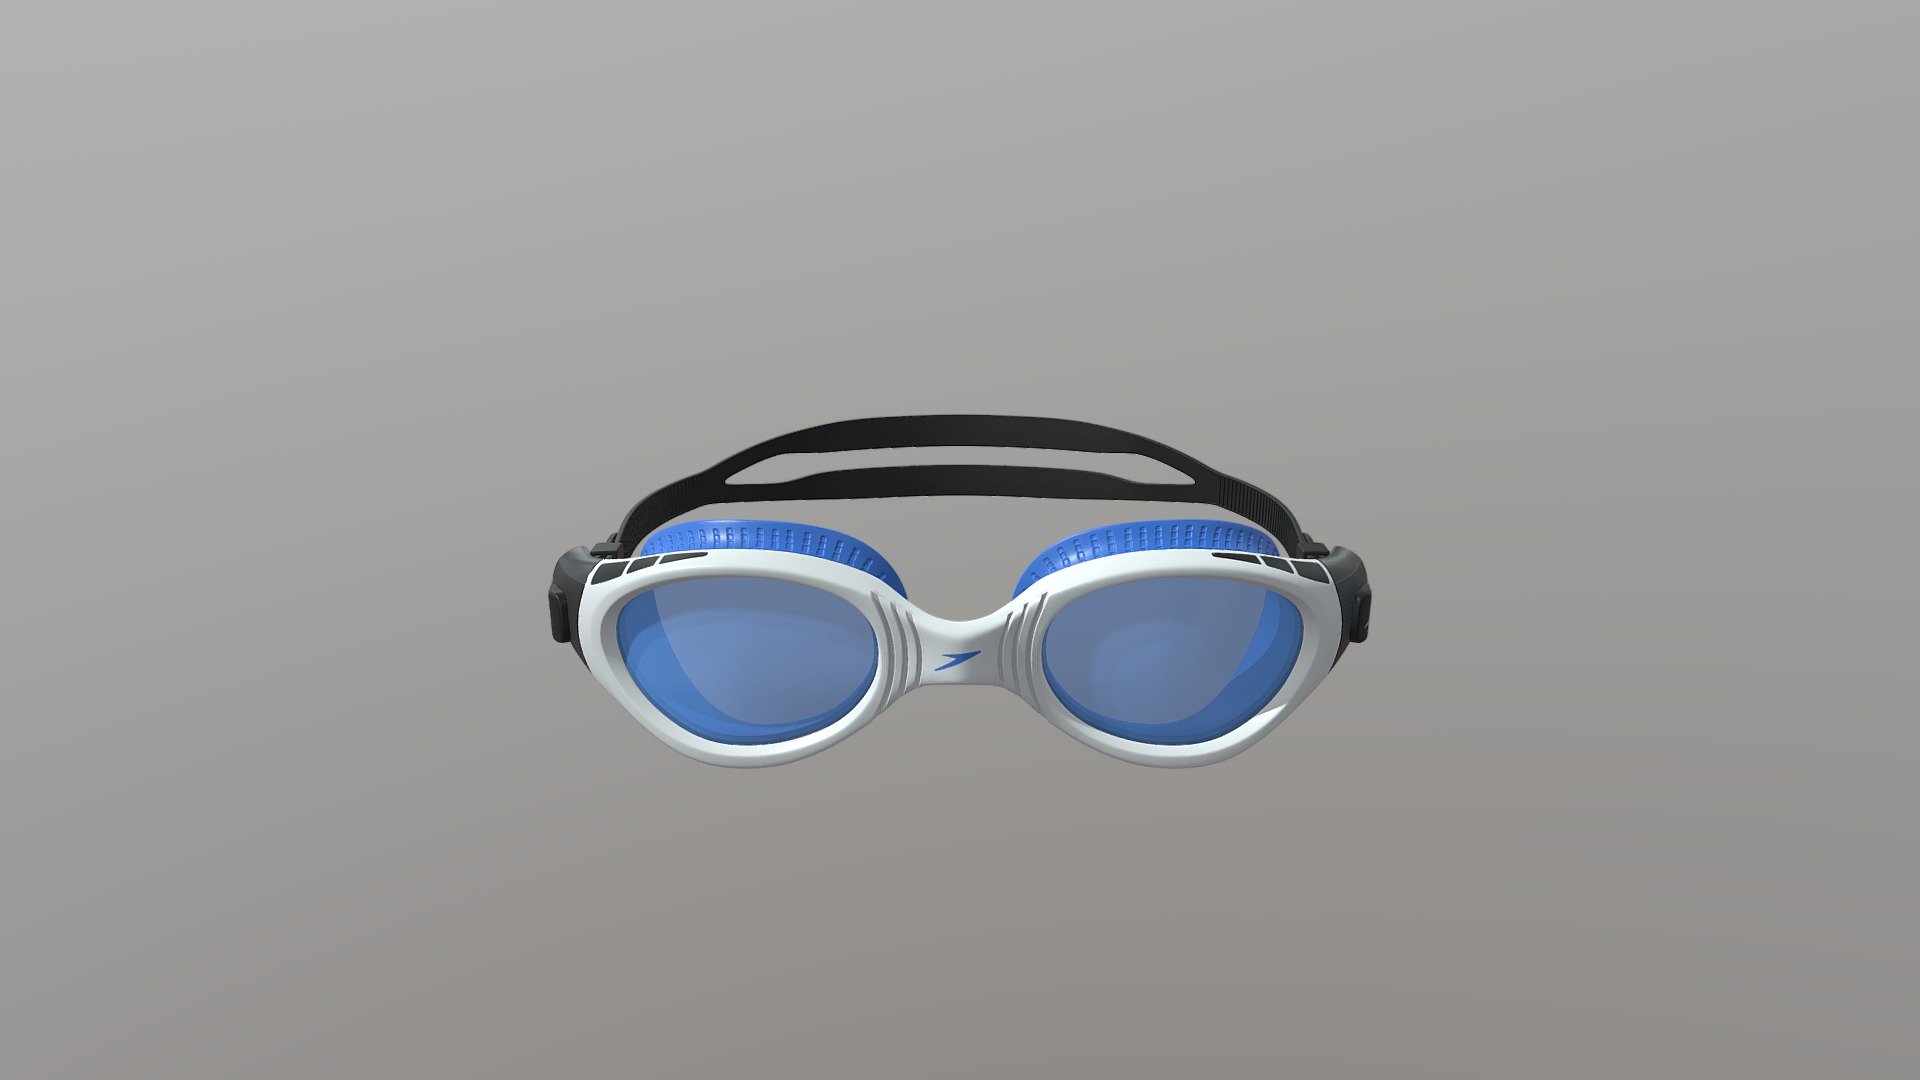 Swimming Goggles Model - Speedo biofuse flexiseal - 3D model by deivo 3d model